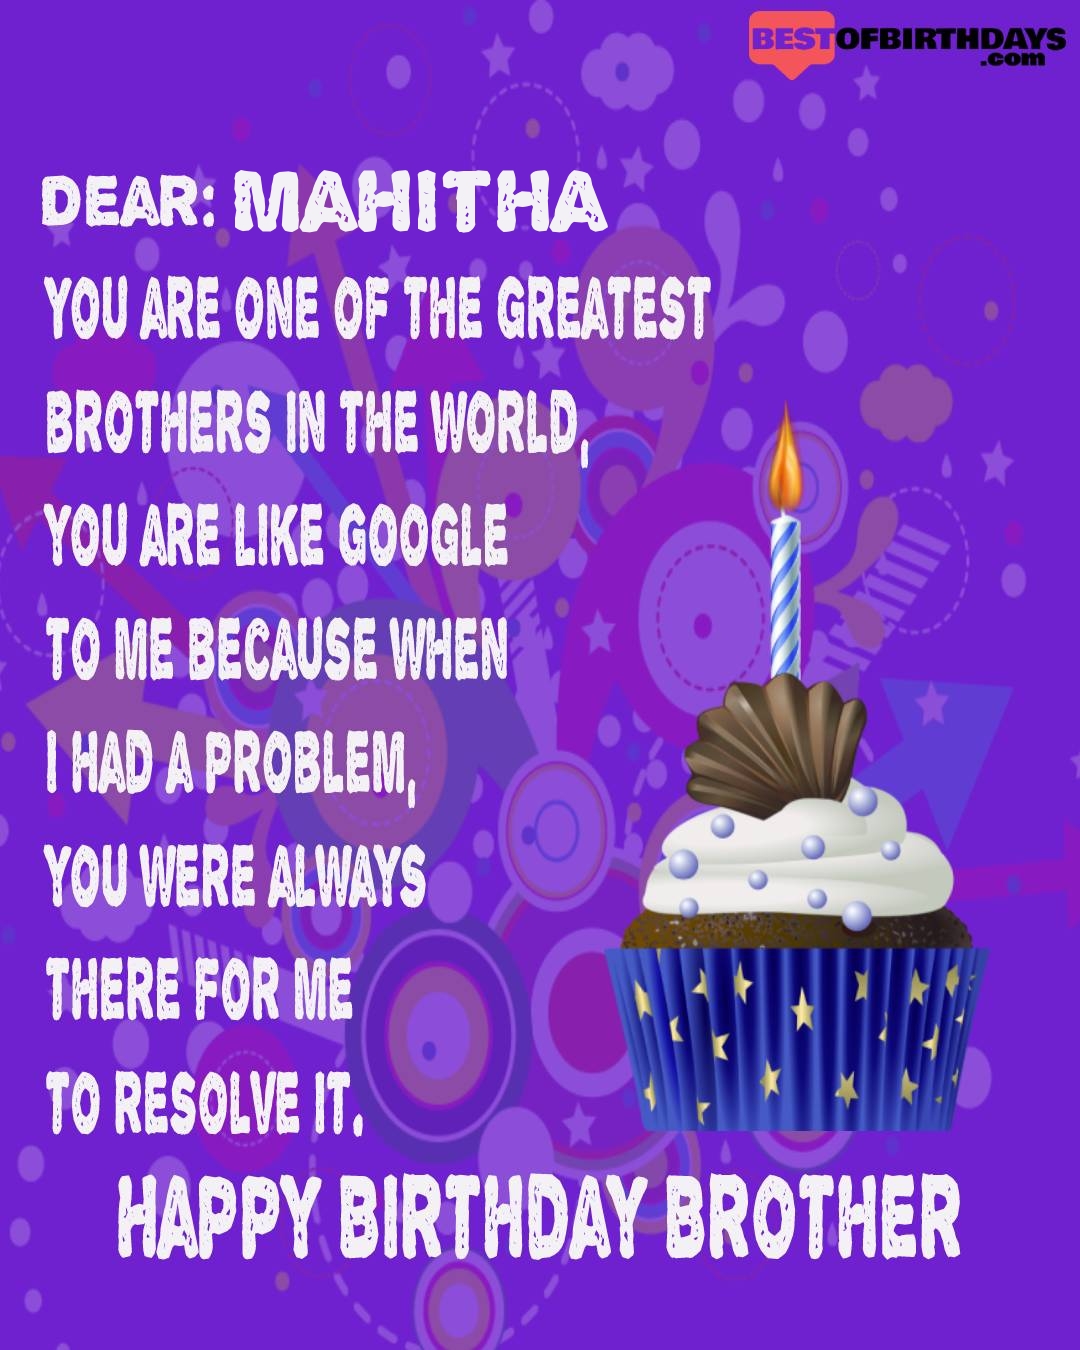 Happy birthday mahitha bhai brother bro